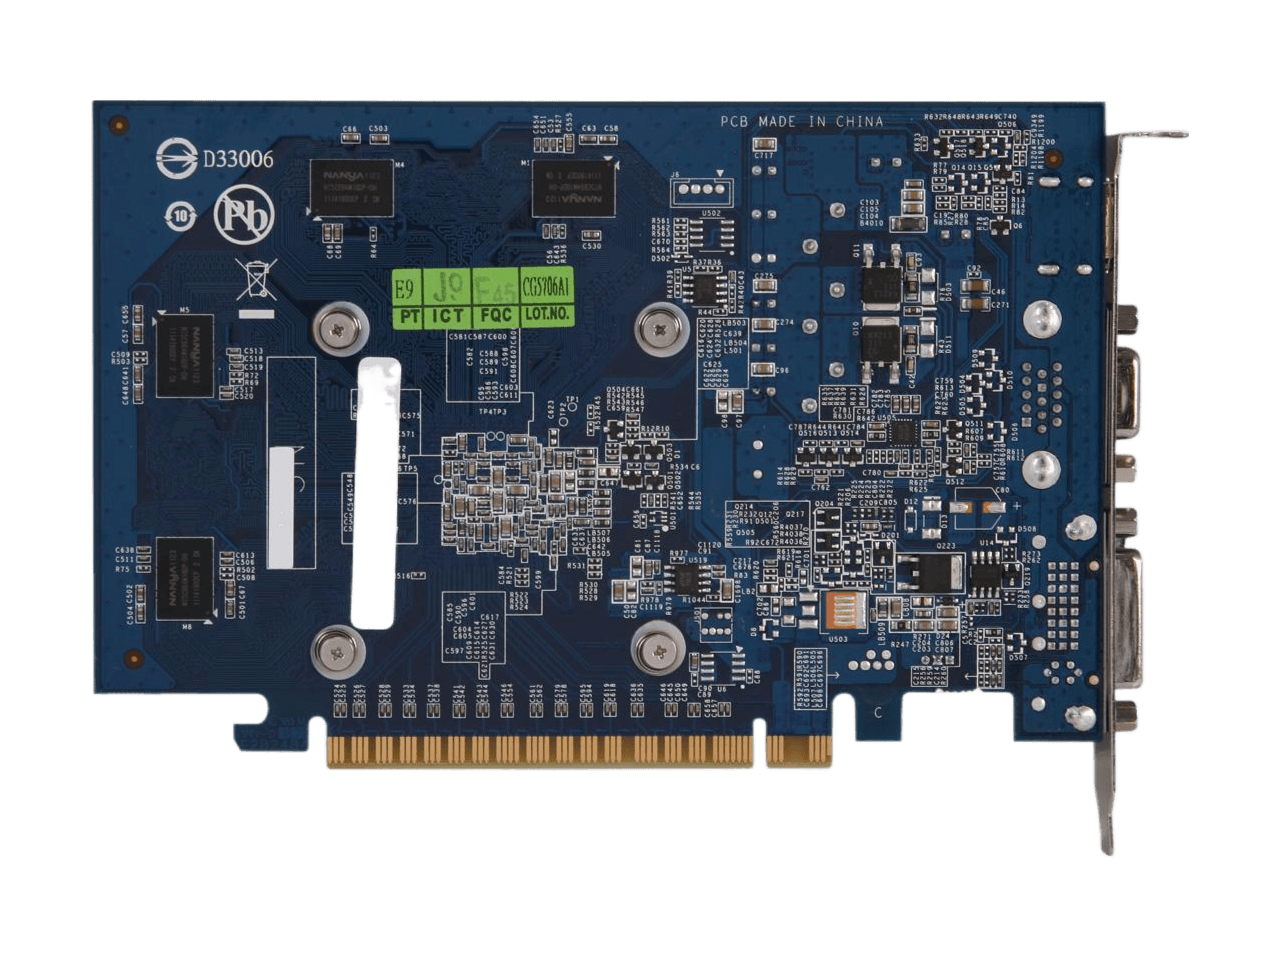 GIGABYTE GeForce GT 630 1GB DDR3 PCI Express 2.0 x16 Video Card GV-N630-1GI